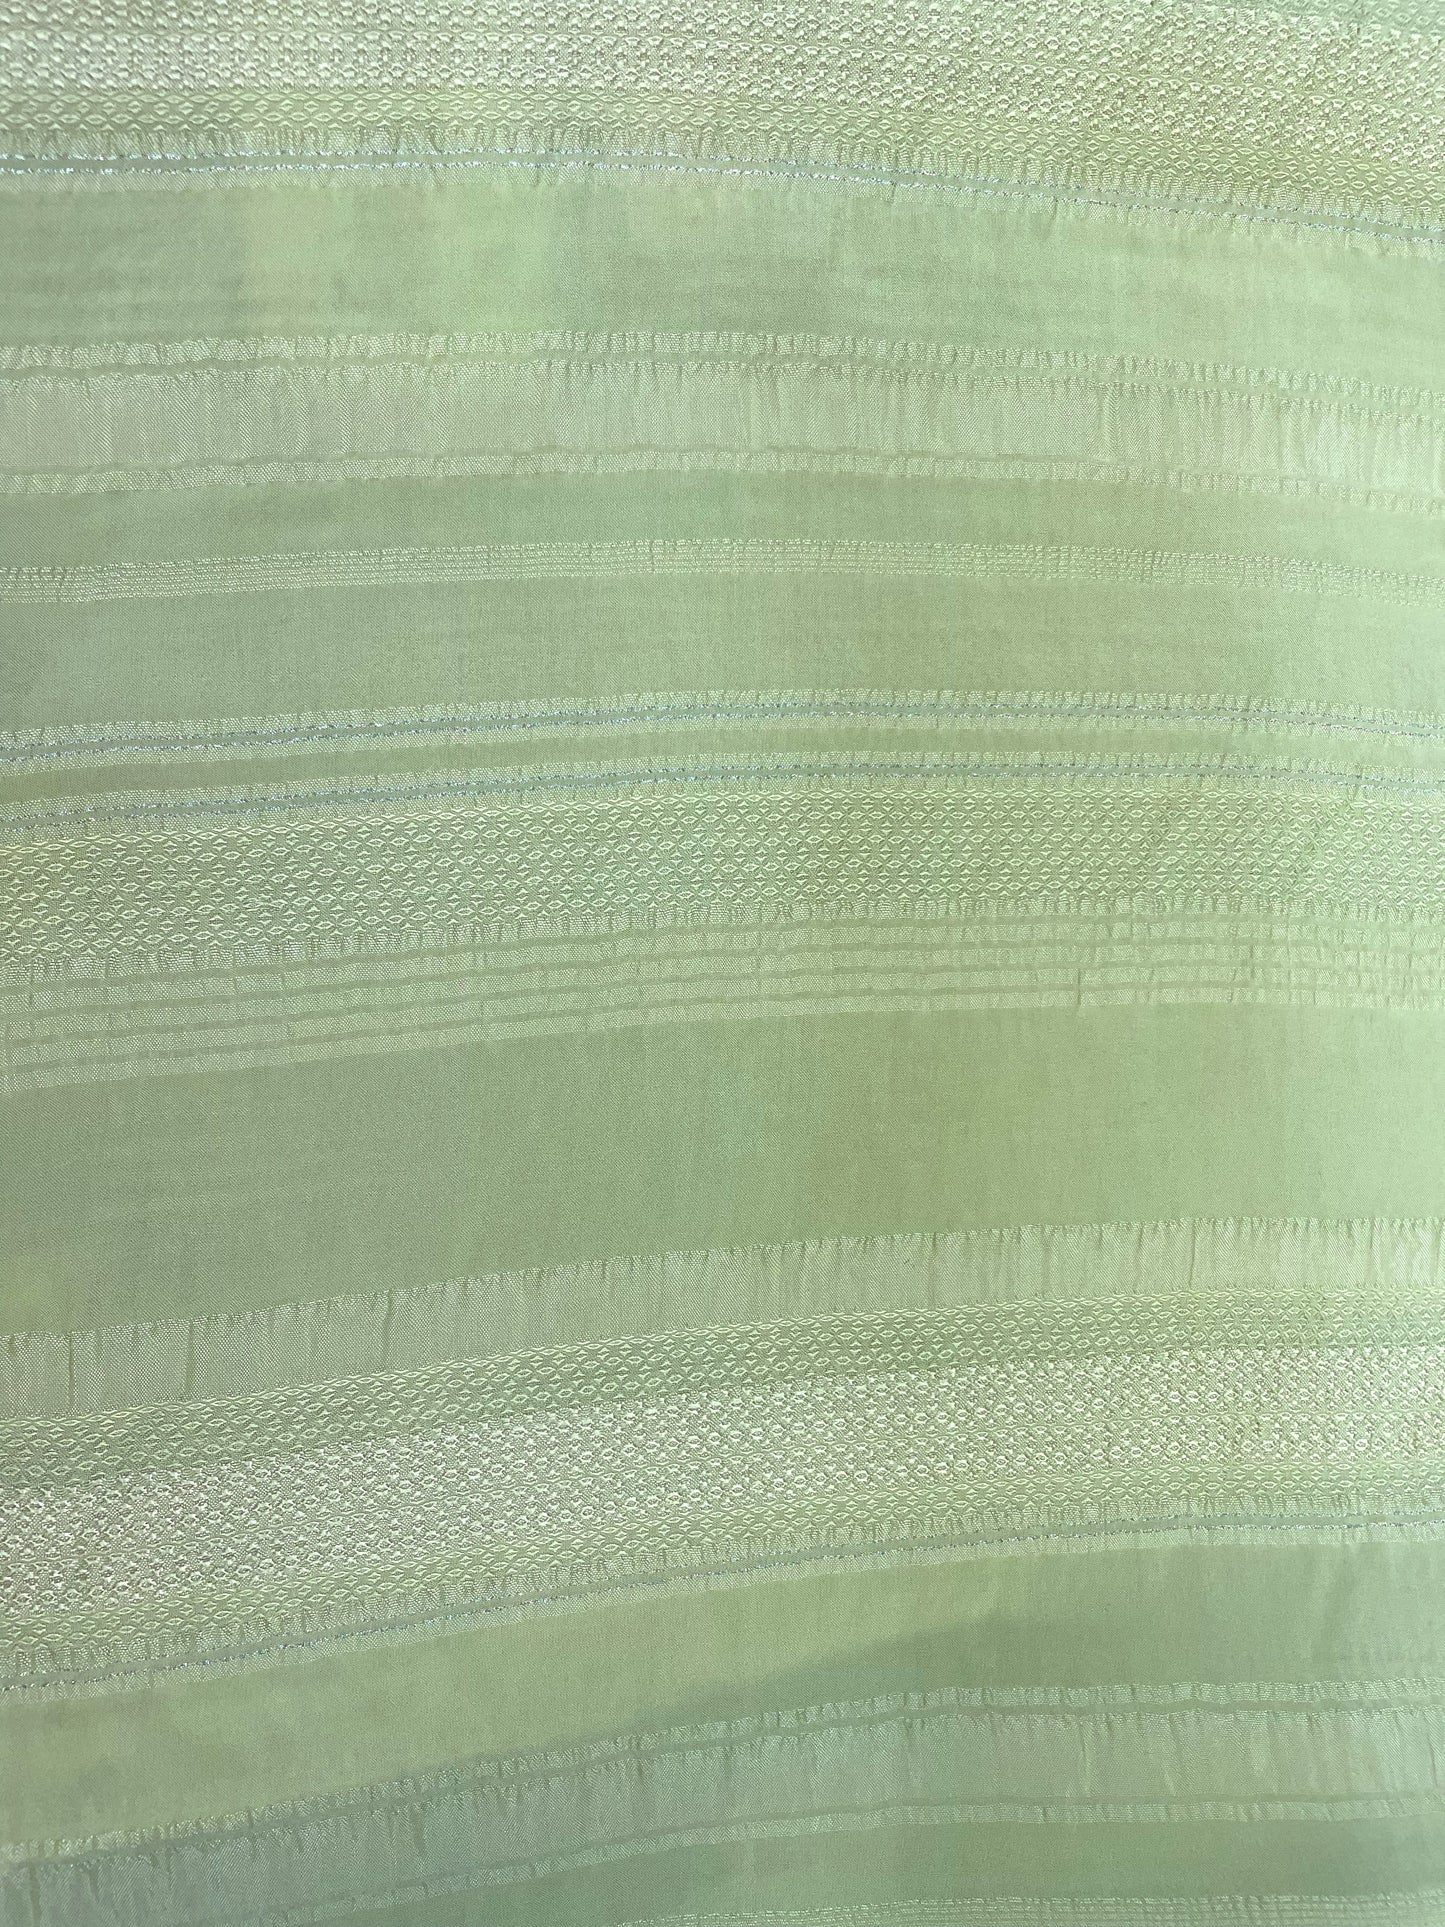 European Stripe Patterned Rayon/Lurex - Lime Green